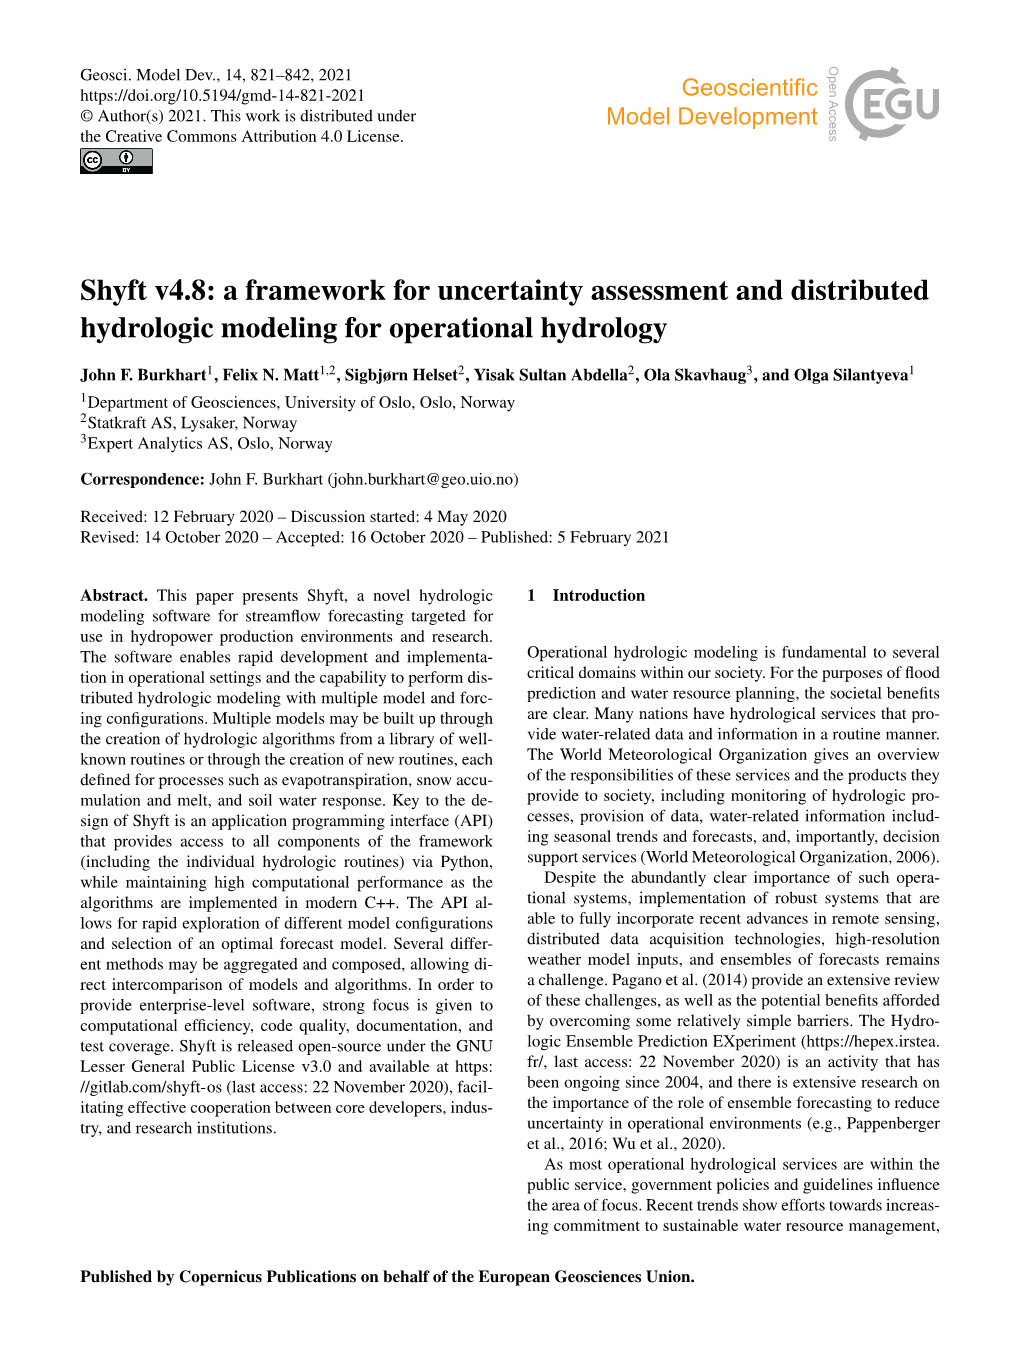 Shyft V4.8: a Framework for Uncertainty Assessment and Distributed Hydrologic Modeling for Operational Hydrology